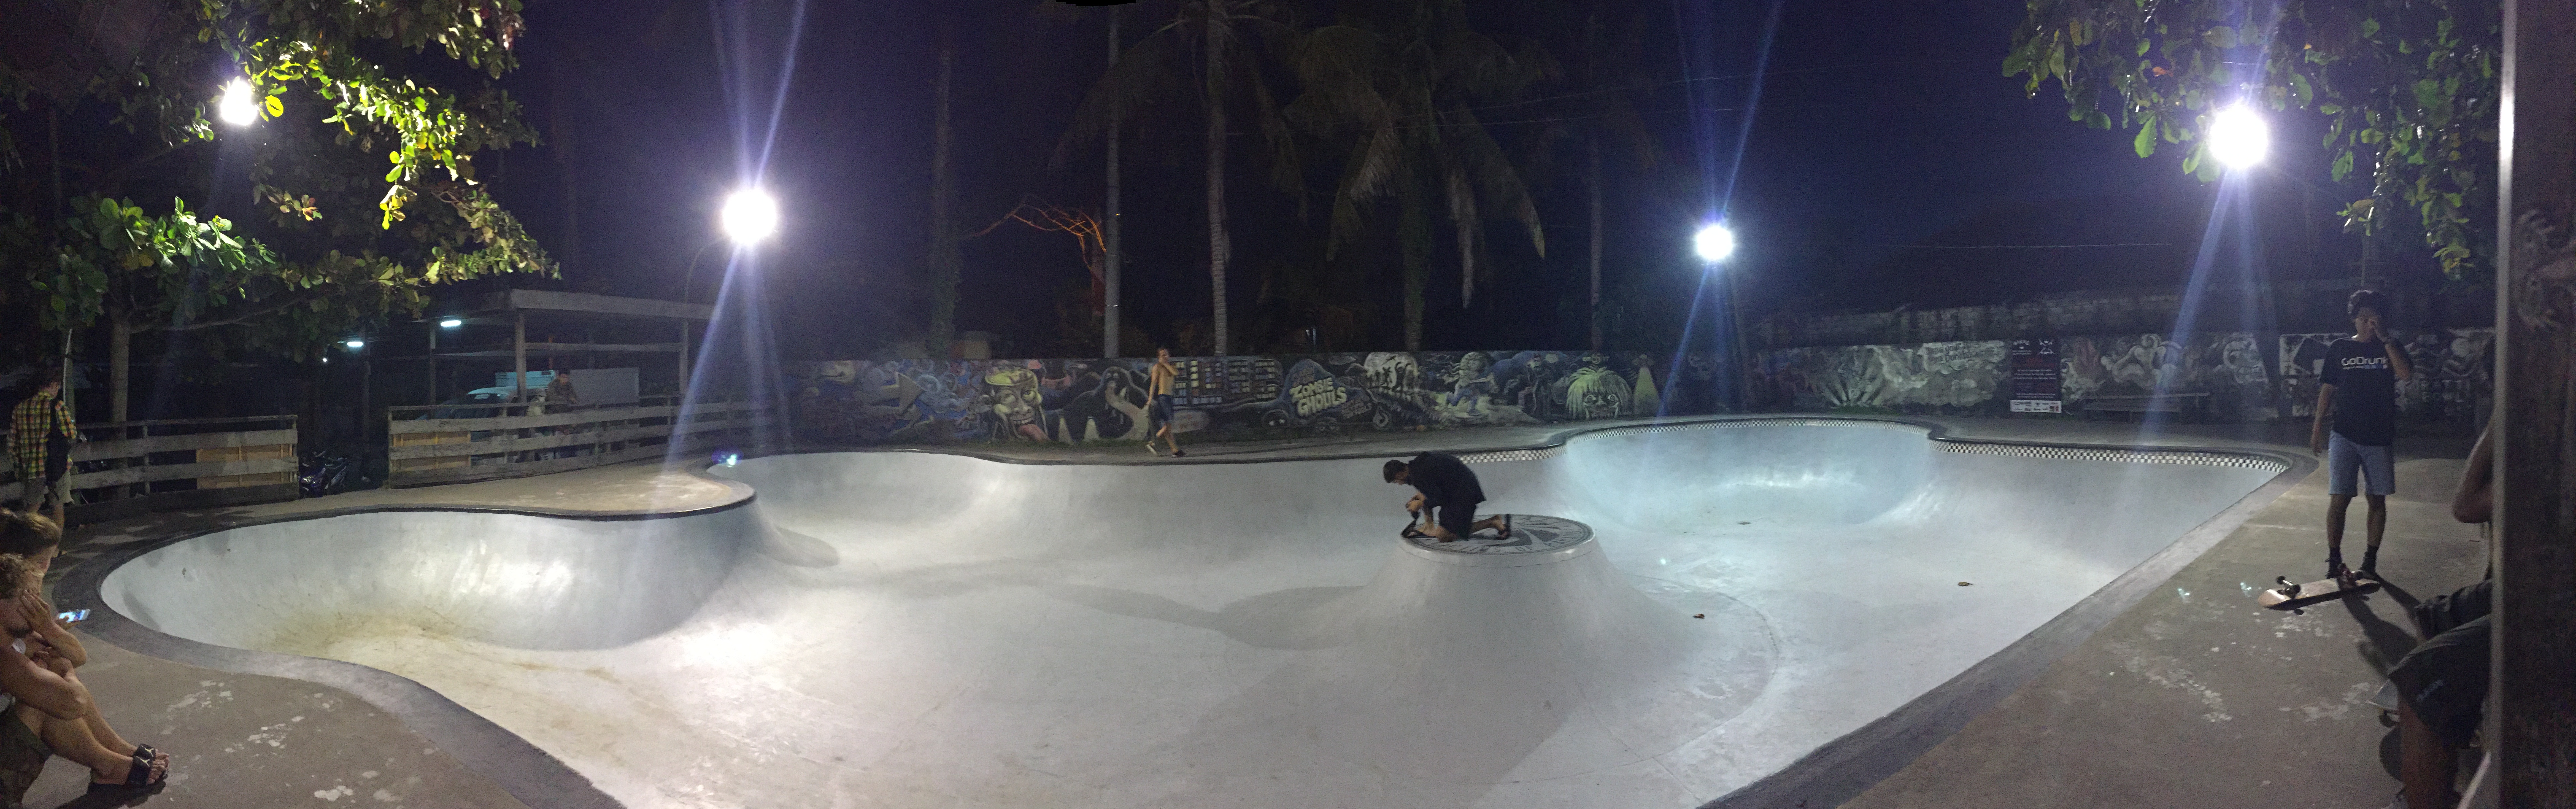 Globe Bali Skatepark